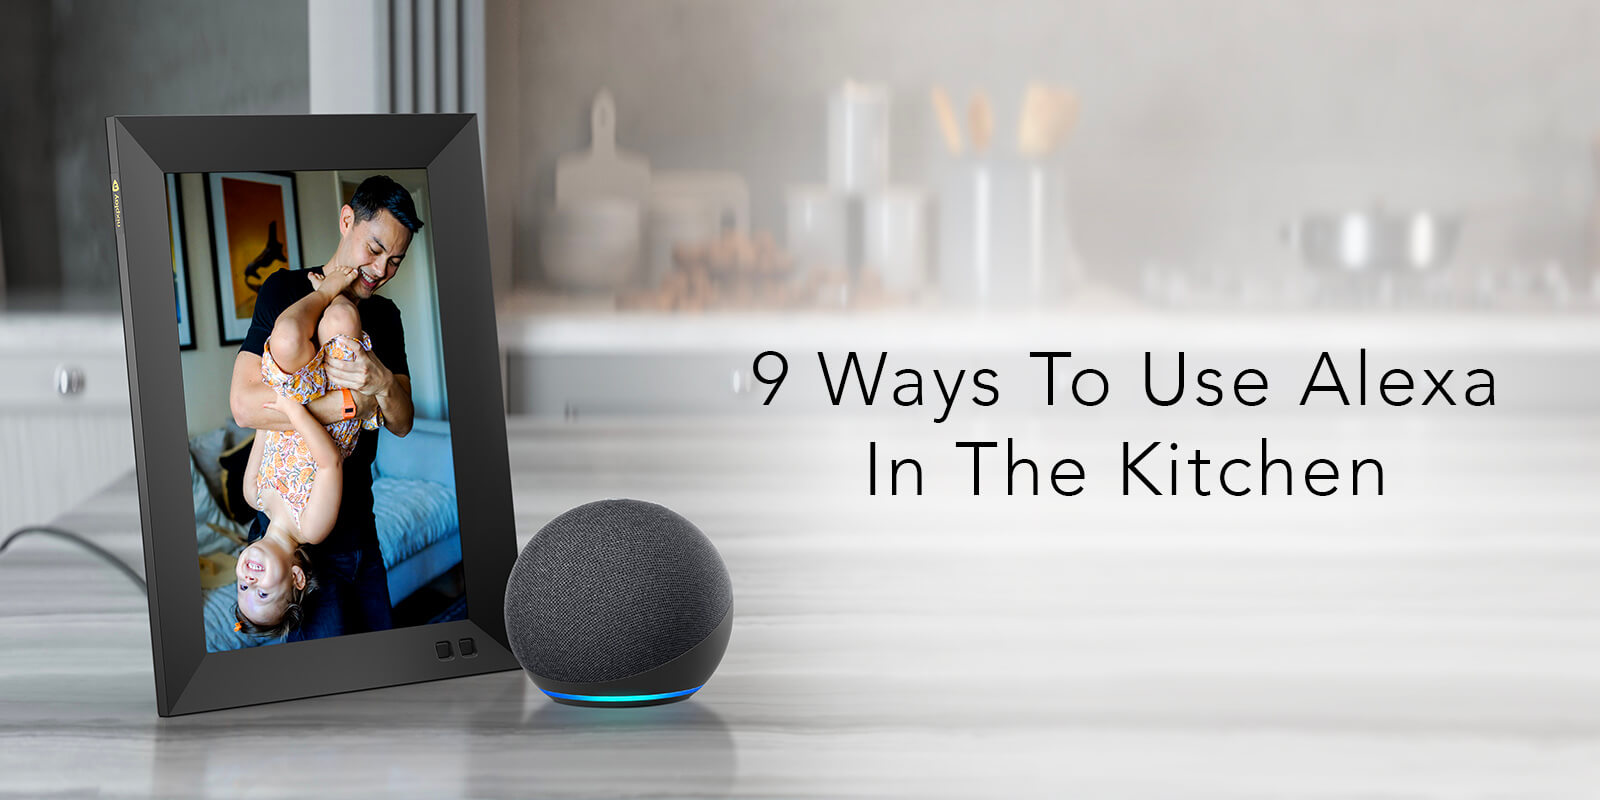 How To Use Alexa: Top 10 Alexa Kitchen Skills | Nixplay